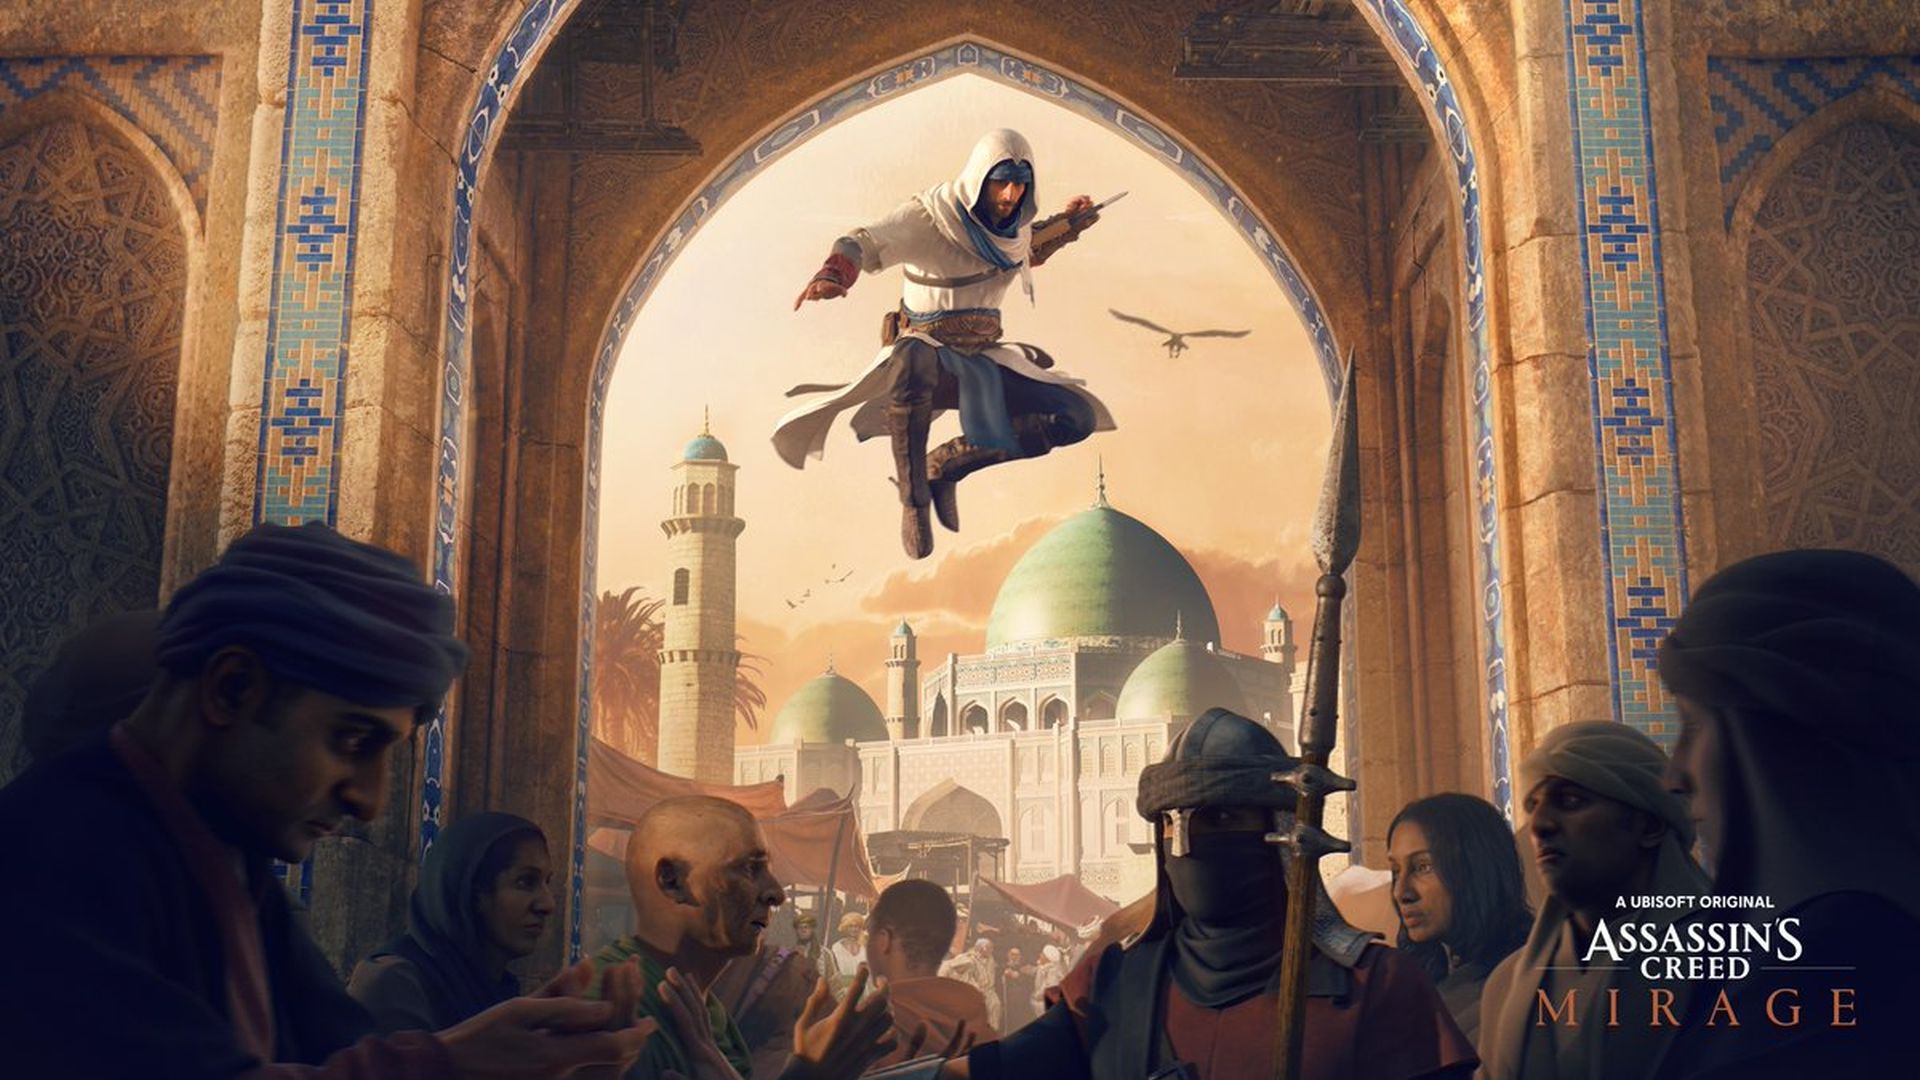 Mystery Assassin's Creed Mirage image seemingly leaks online | GamesRadar+